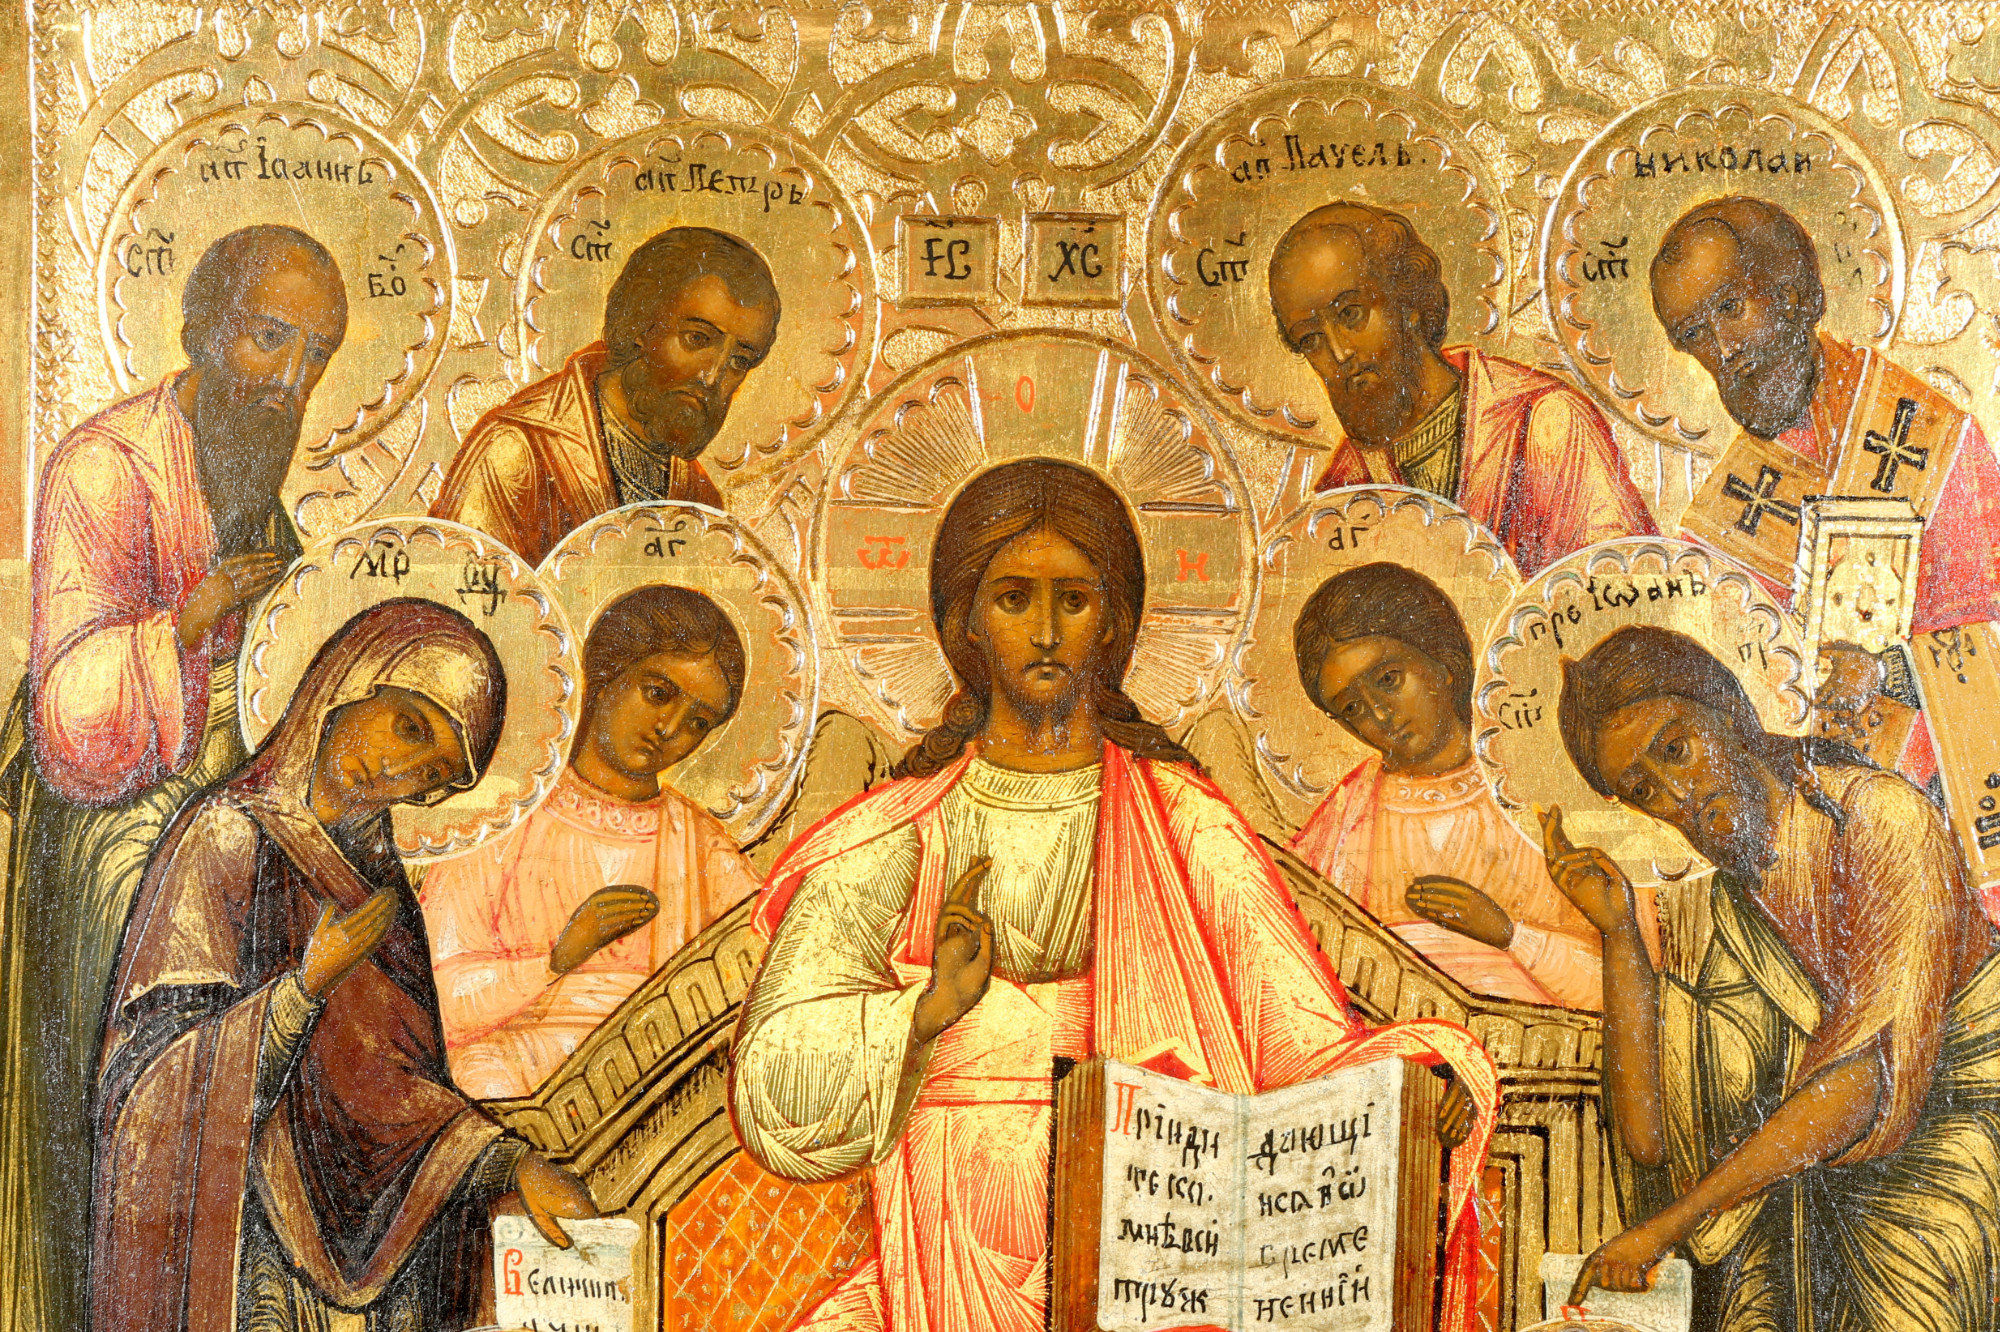 Russia icon extended Deesis - enthroned Christ, Russland Ikone erweiterte Deesis - thronender Christ - Image 2 of 5